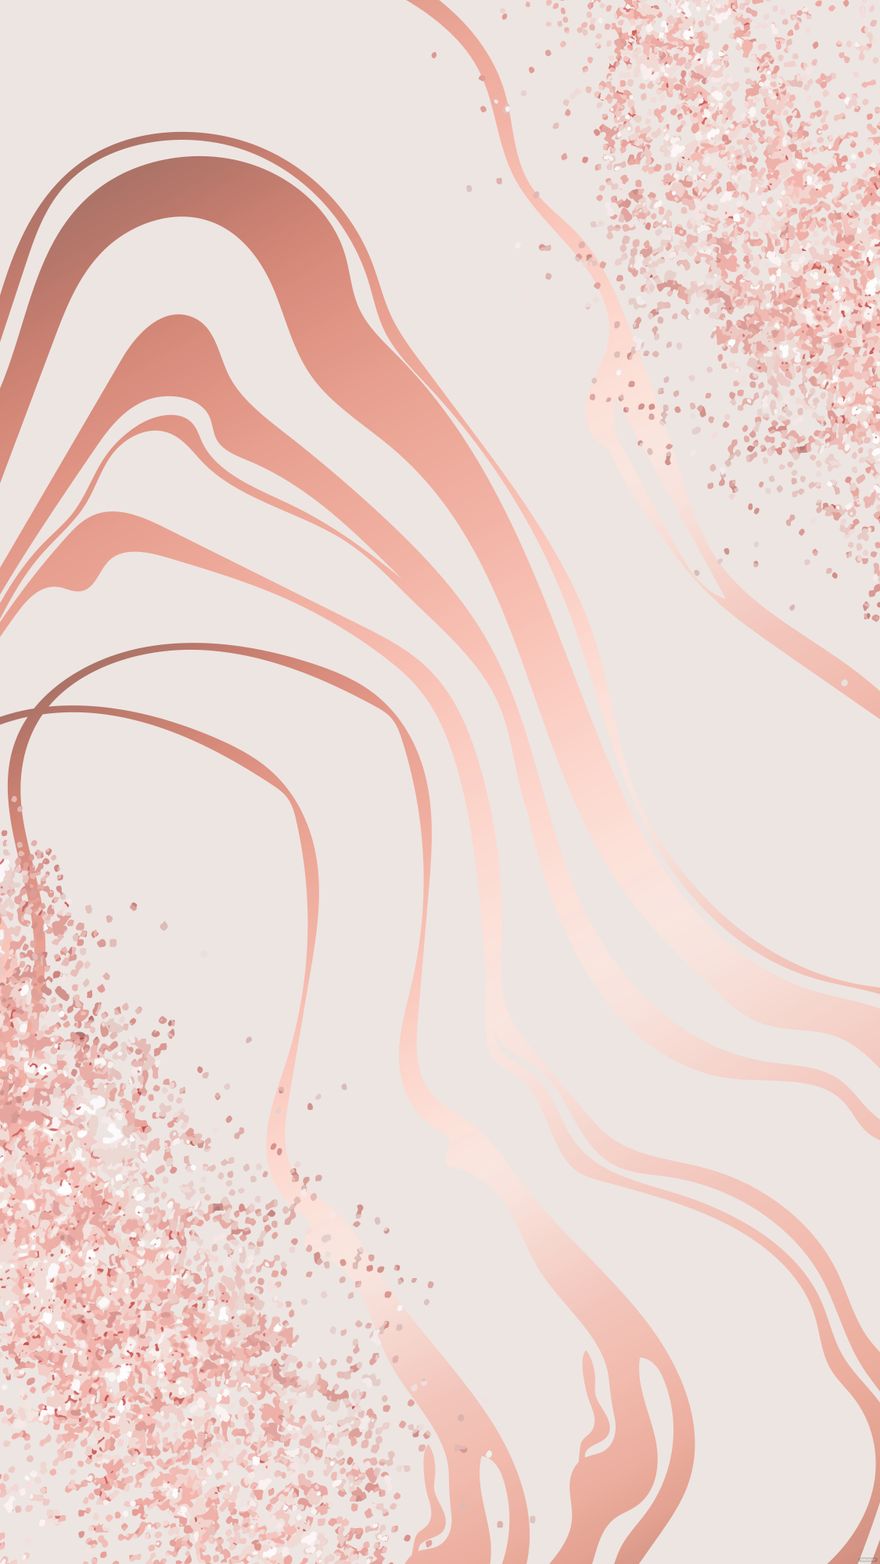 Free Rose Gold Glitter Iphone Background - Download in Illustrator, EPS,  SVG, JPG